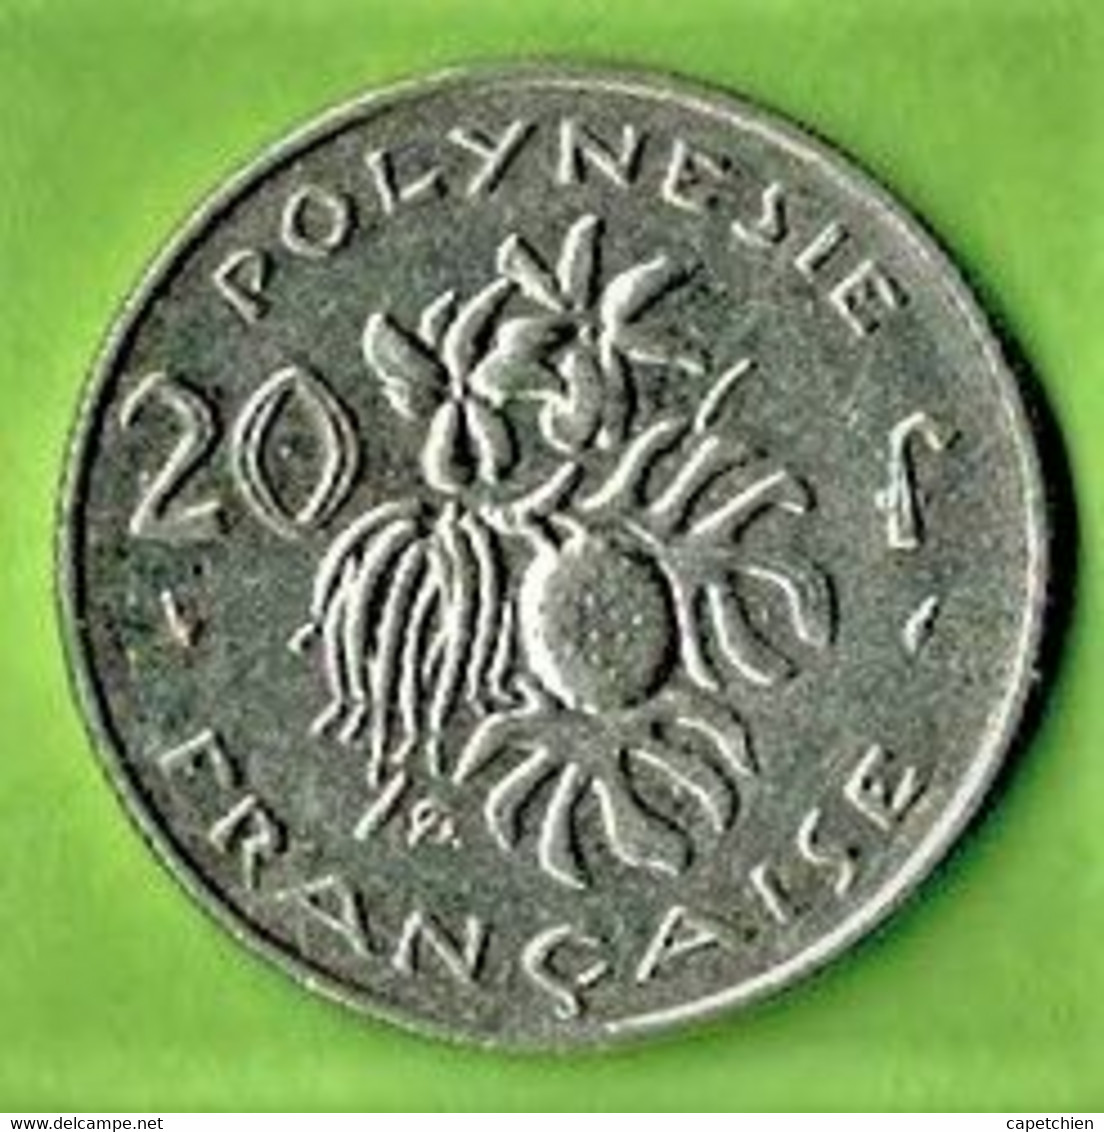 POLYNESIE FRANCAISE / 20 FRANCS / 1983 / - Comorre